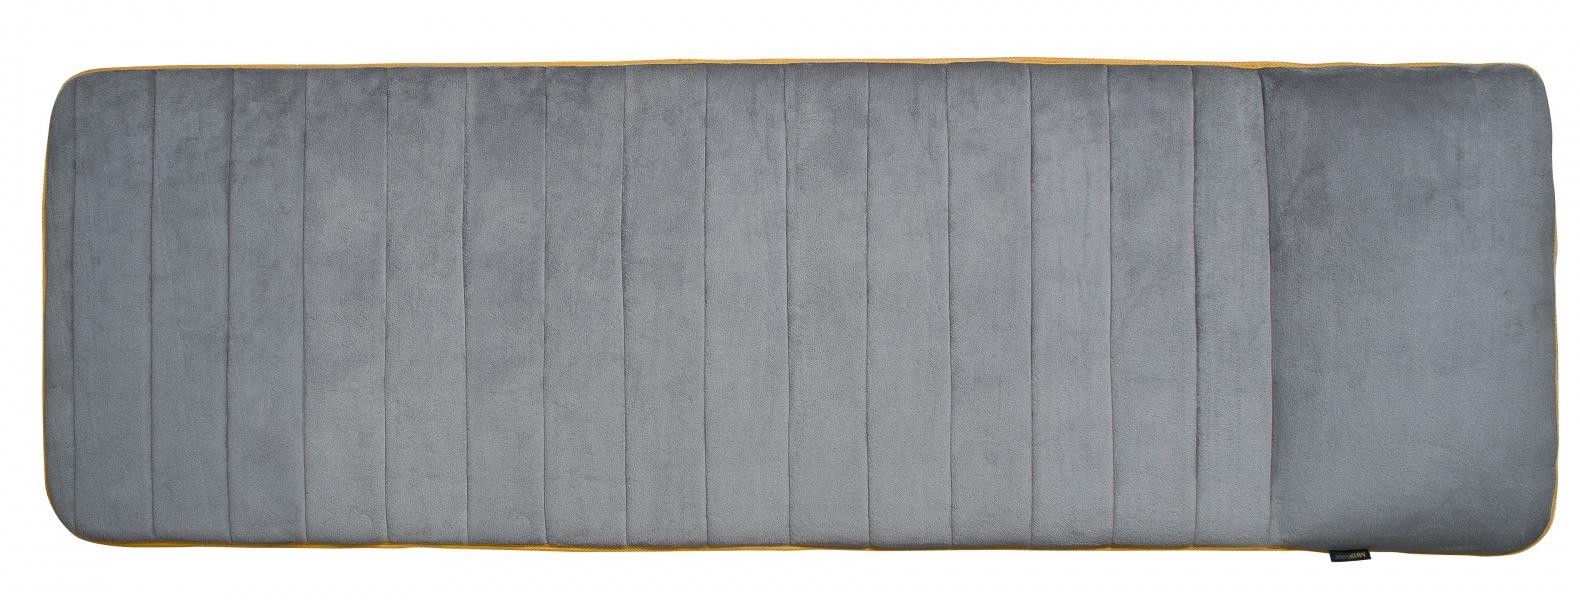 Masažinis kilimėlis Medisana Massage mat MM 825, 14.4 W, pilka 